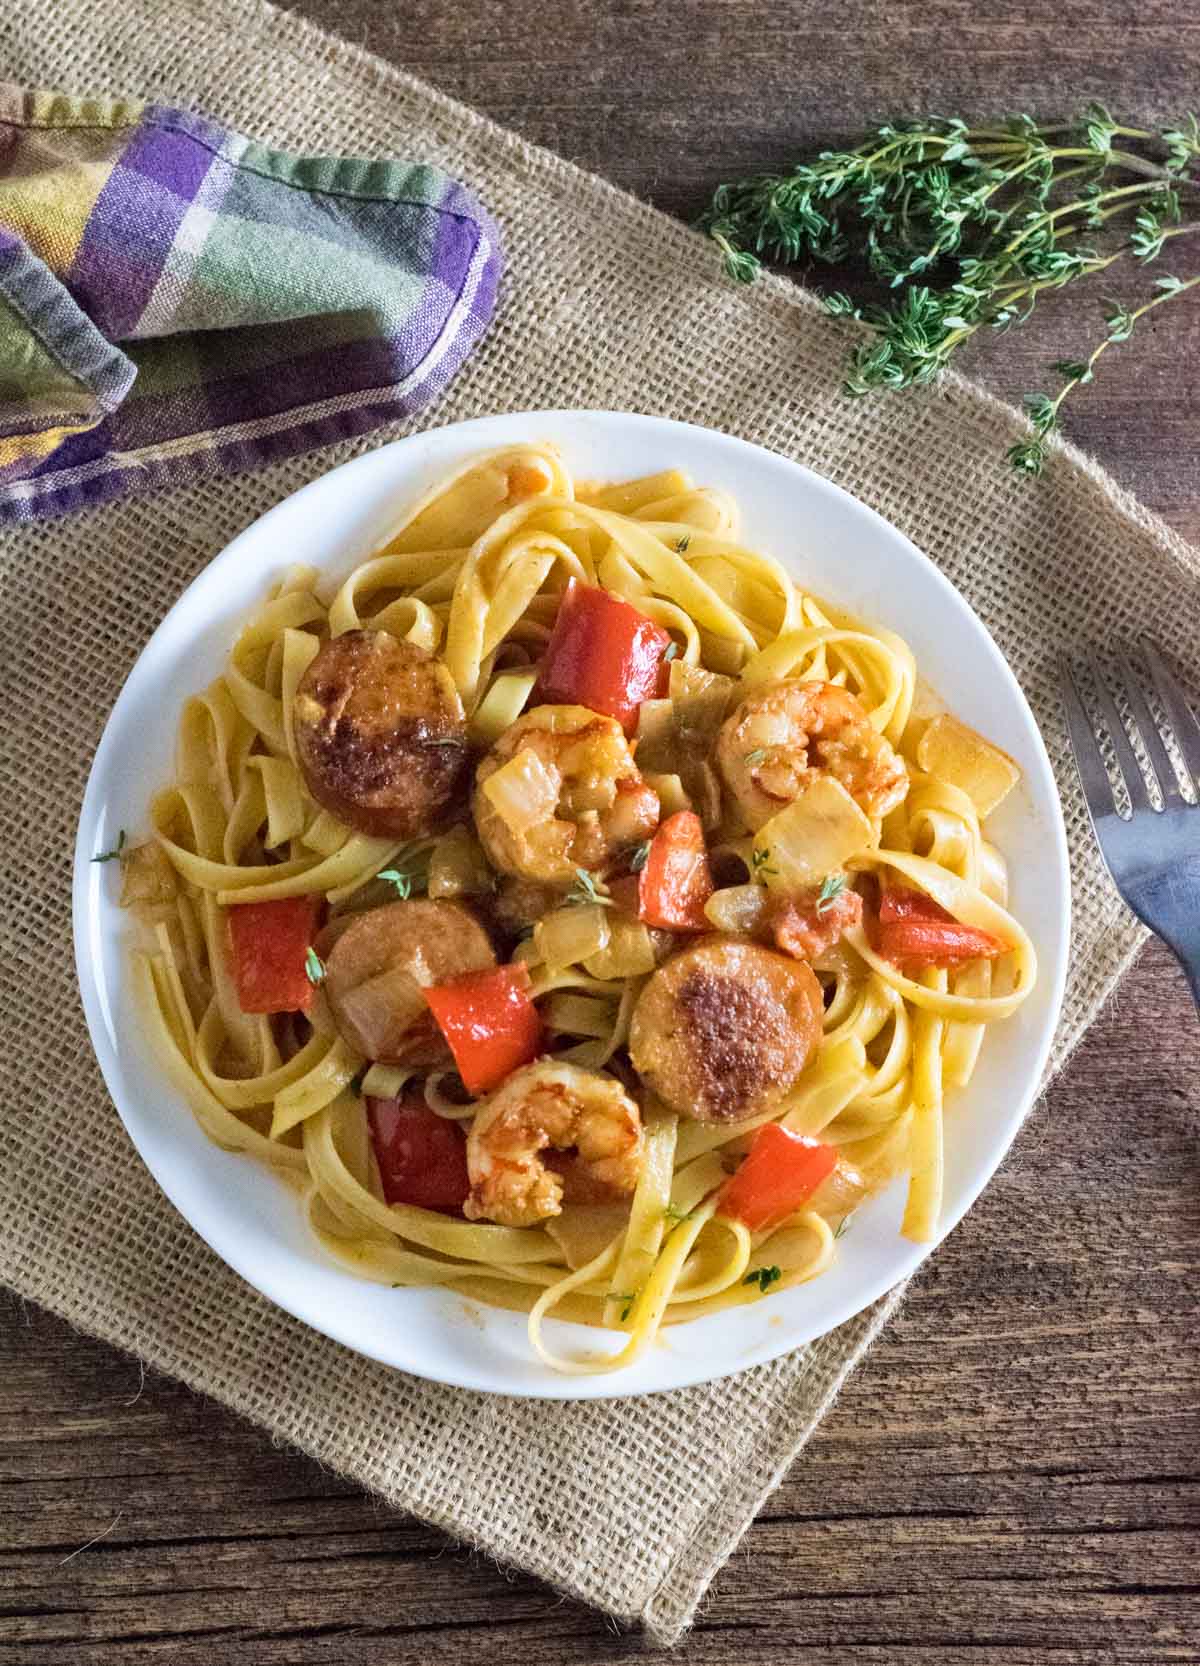 Cajun shrimp and sausage pasta on plate.